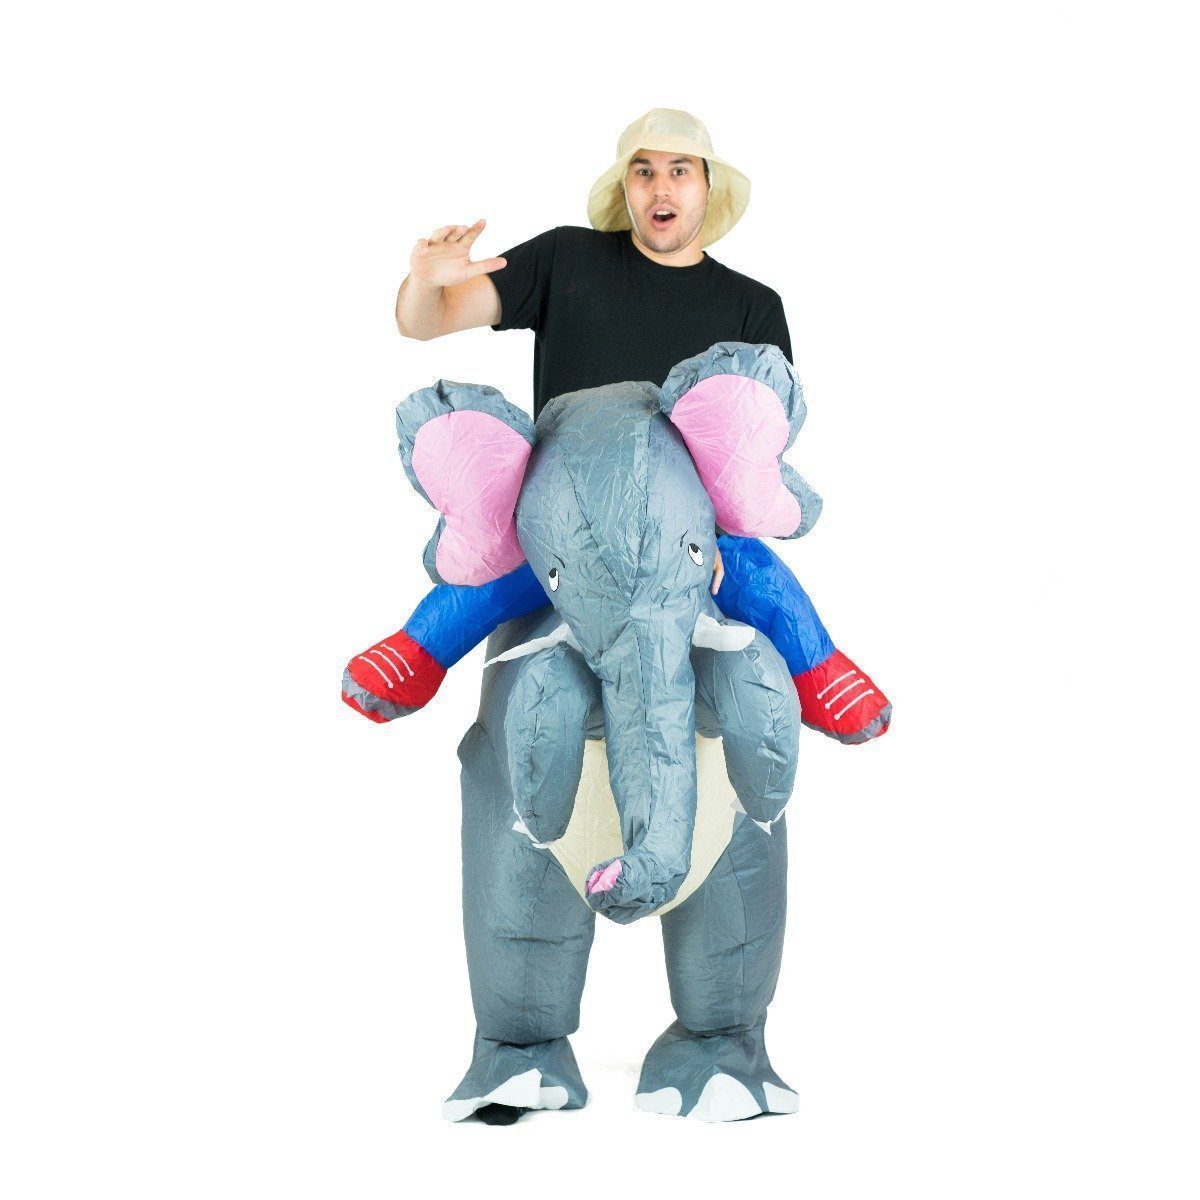 Fancy Dress - Inflatable Elephant Costume